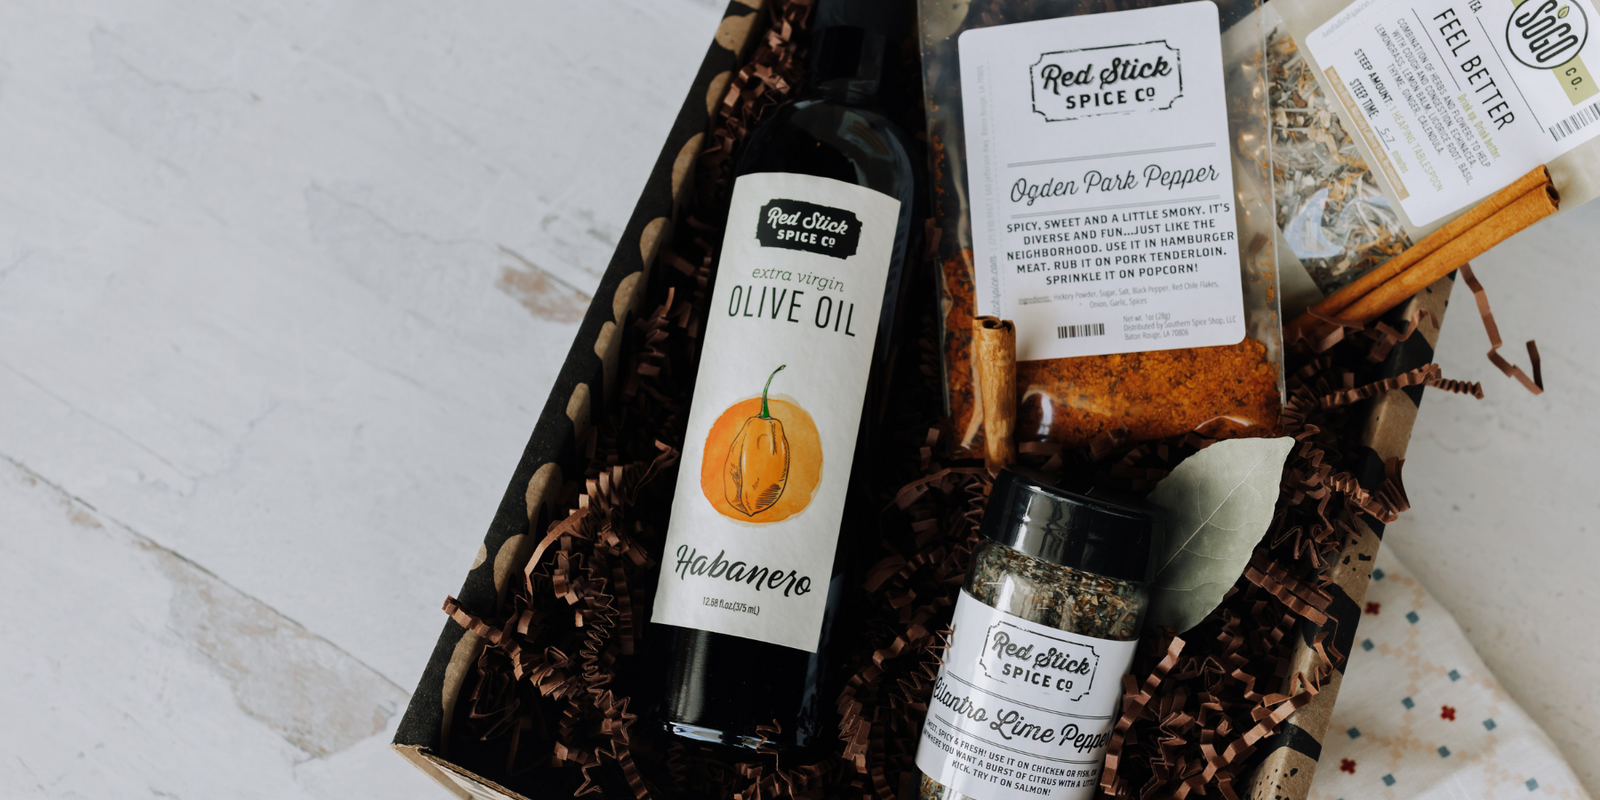 Popcorn Seasoning Gift Kit | Seven Organic Spice Blends